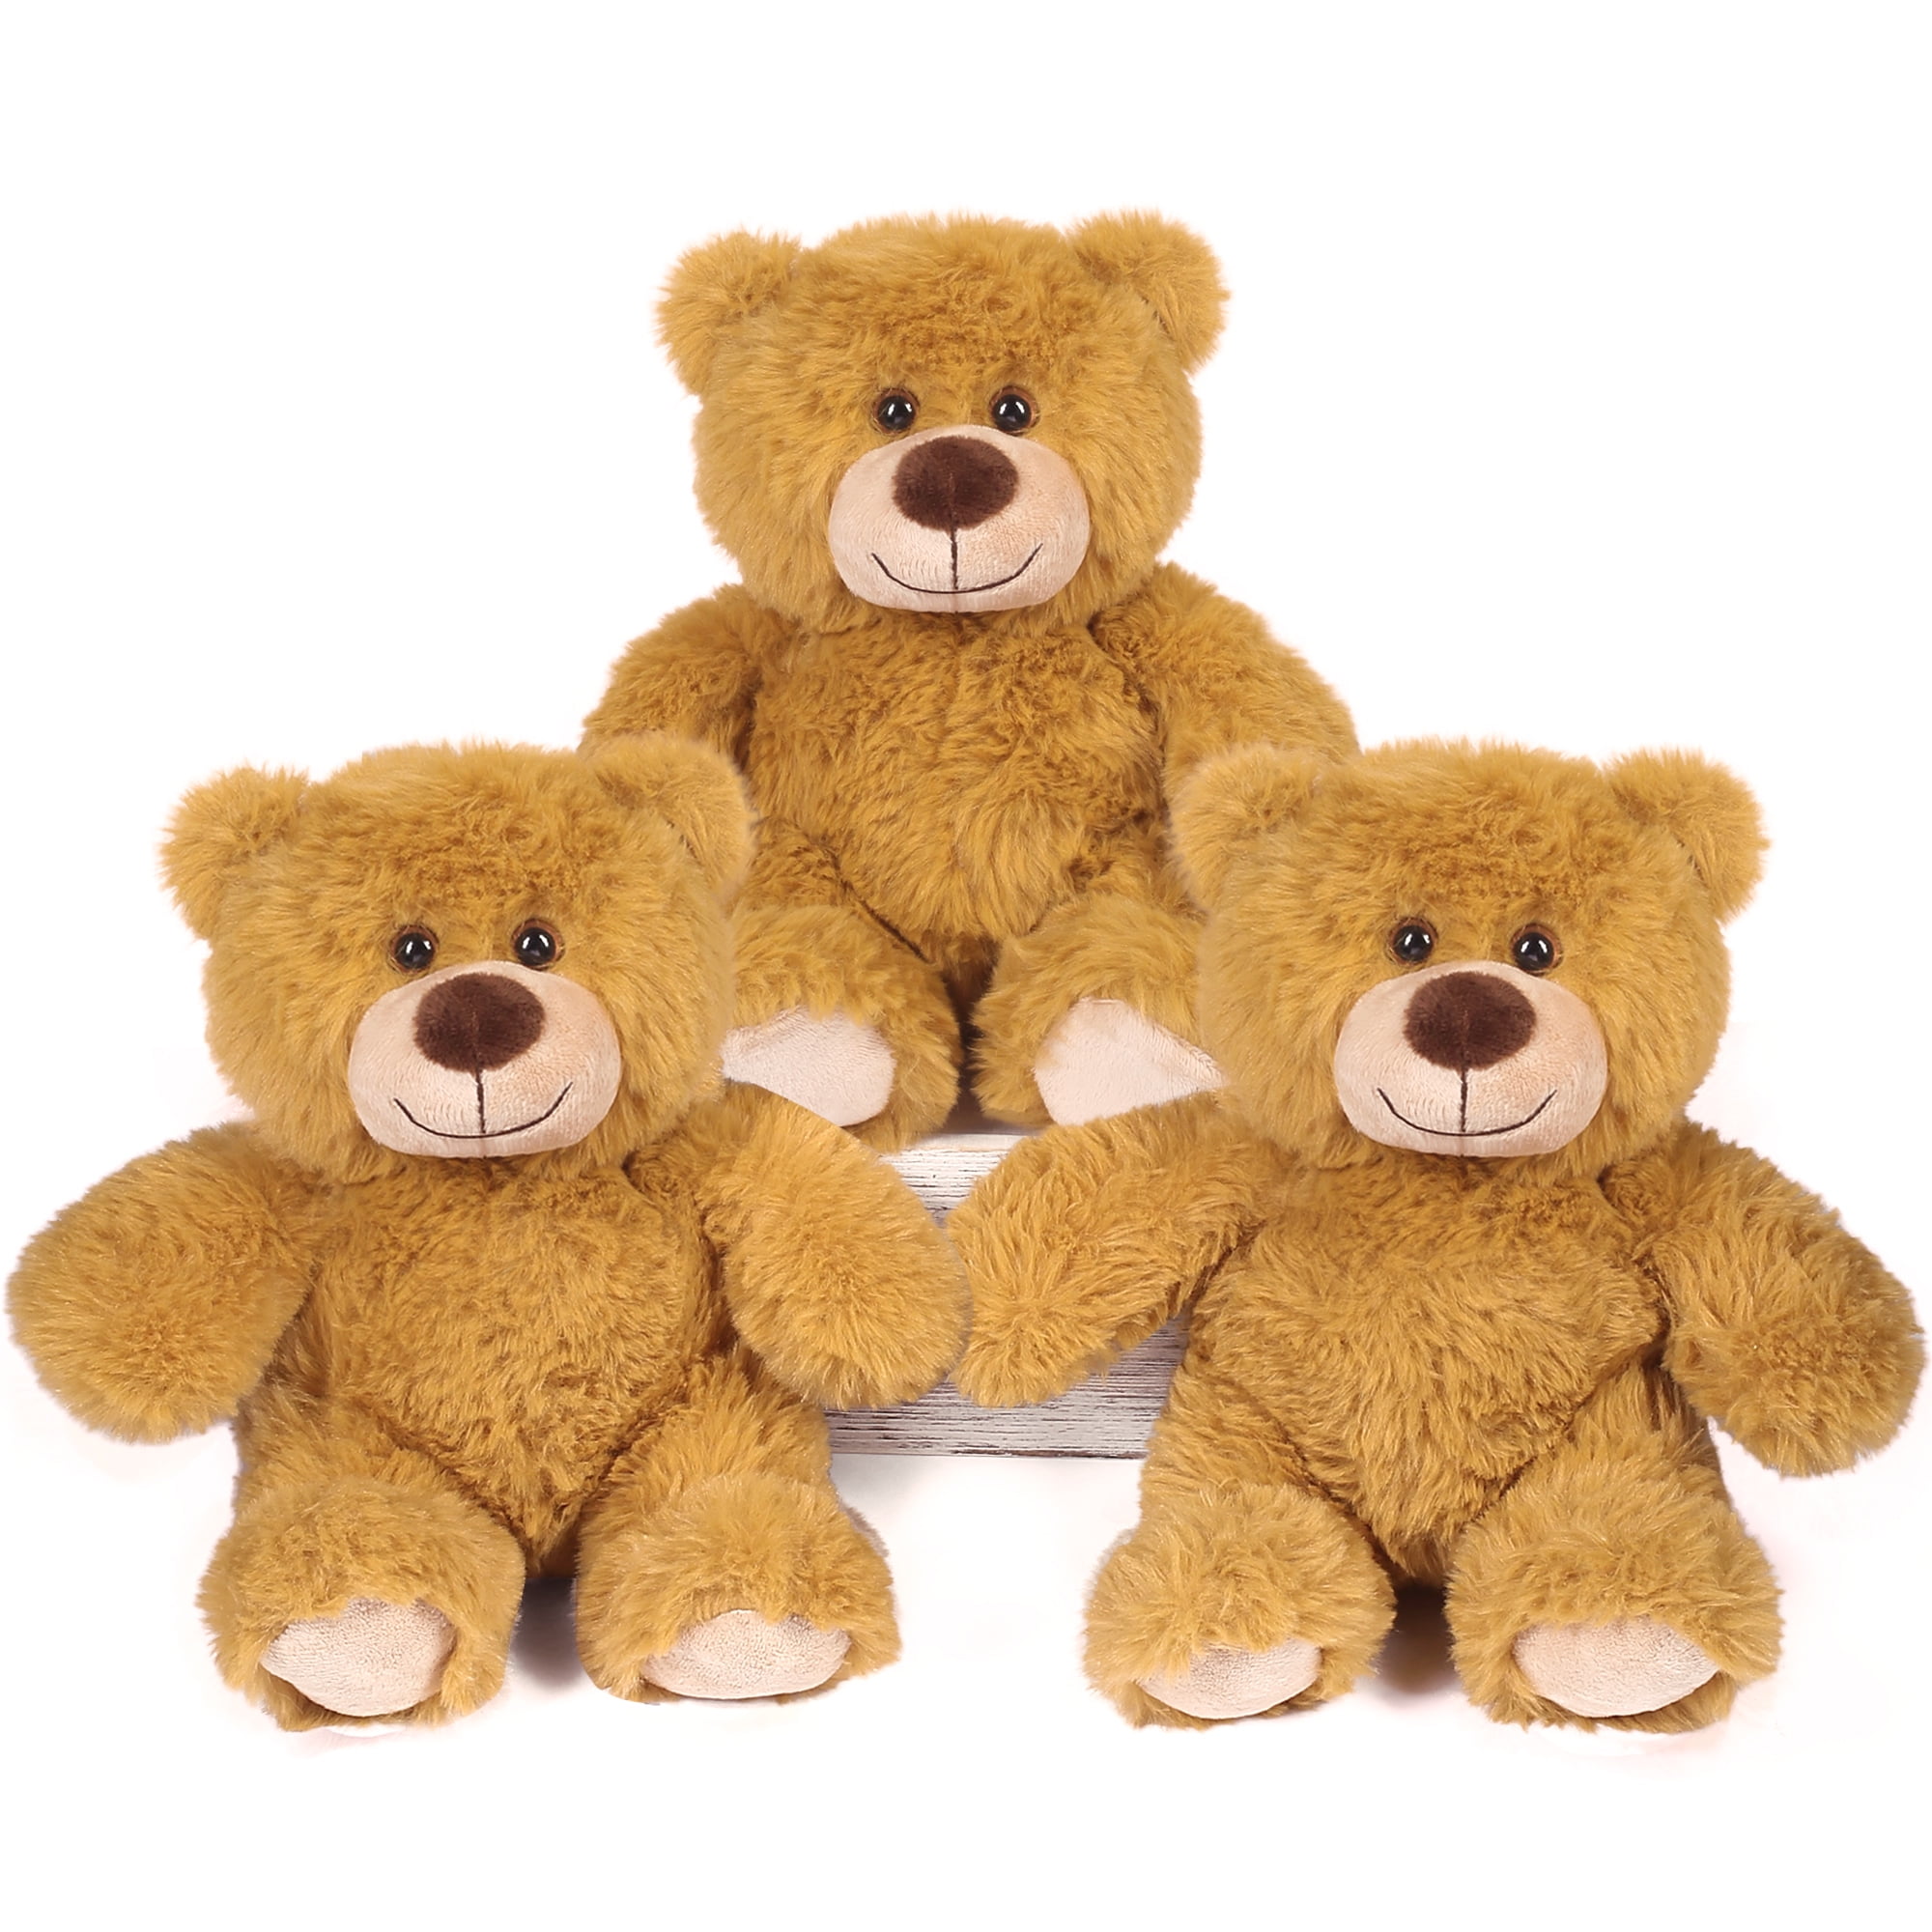 BenBen 3 Pakcs 10 in Teddy Bear Stuffed Animal Plush Toys, Brown ...